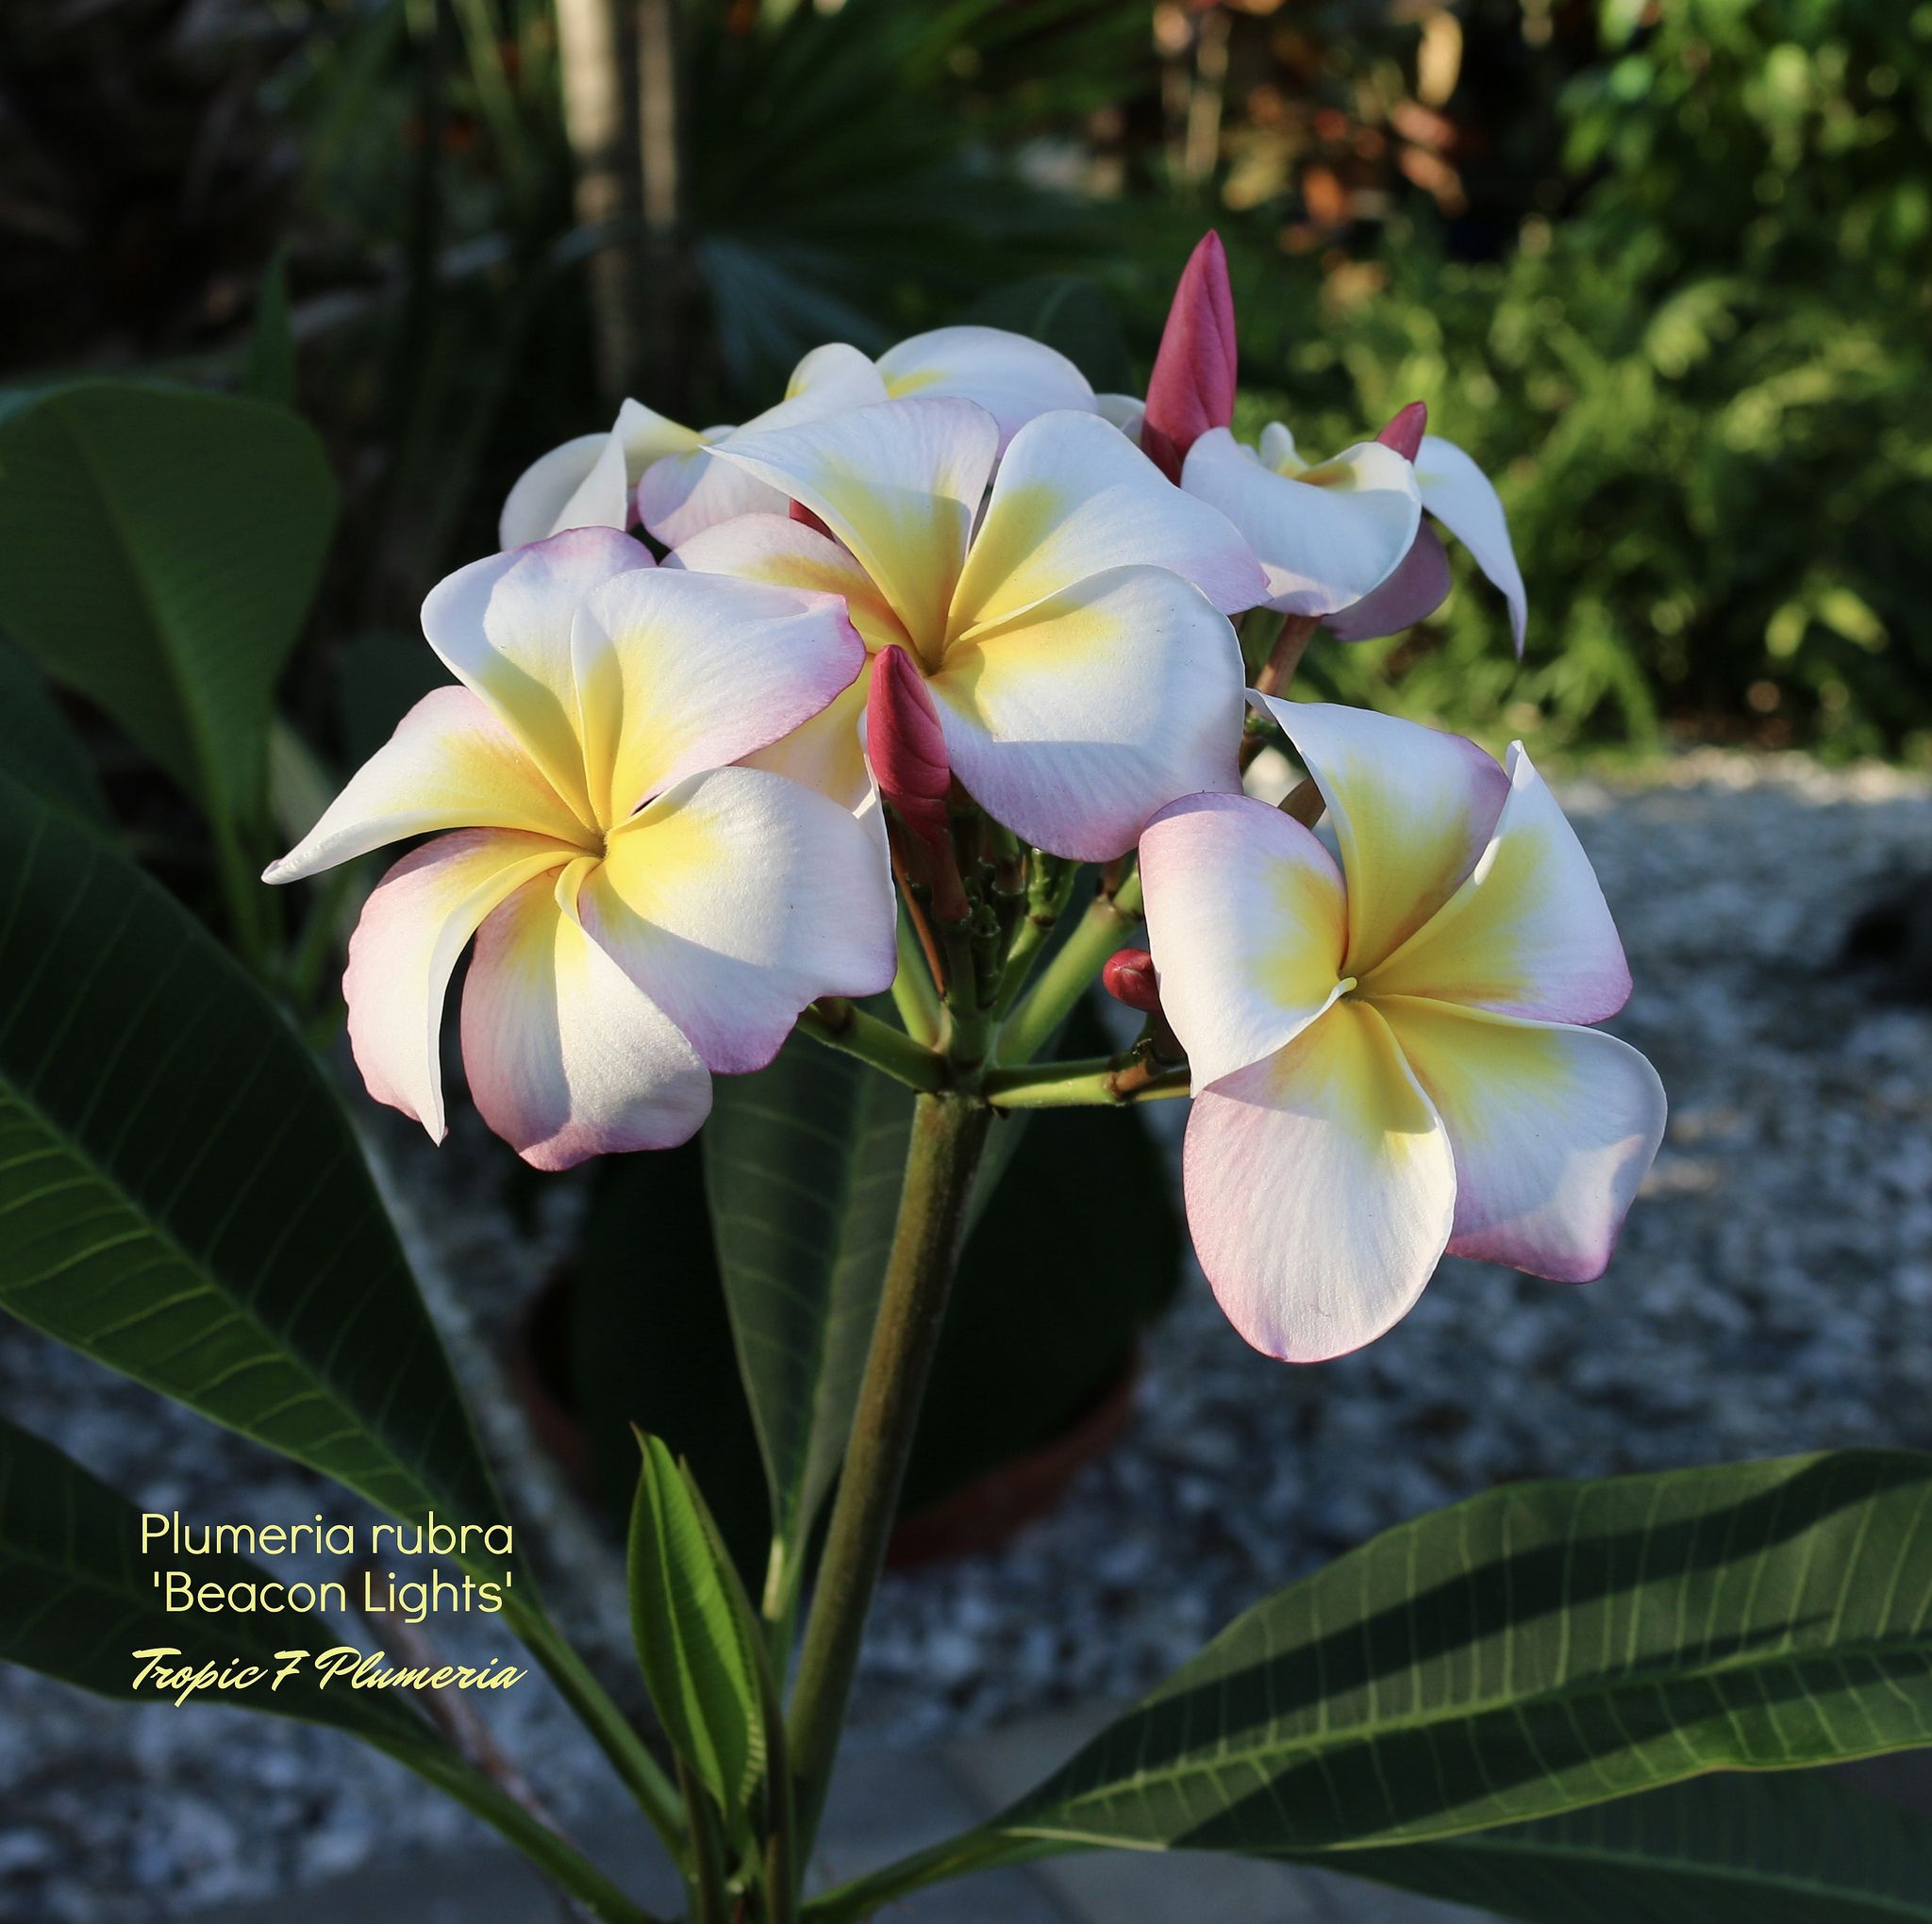 Plumeria rubra 'Beacon Lights' | Flowers and Gardens